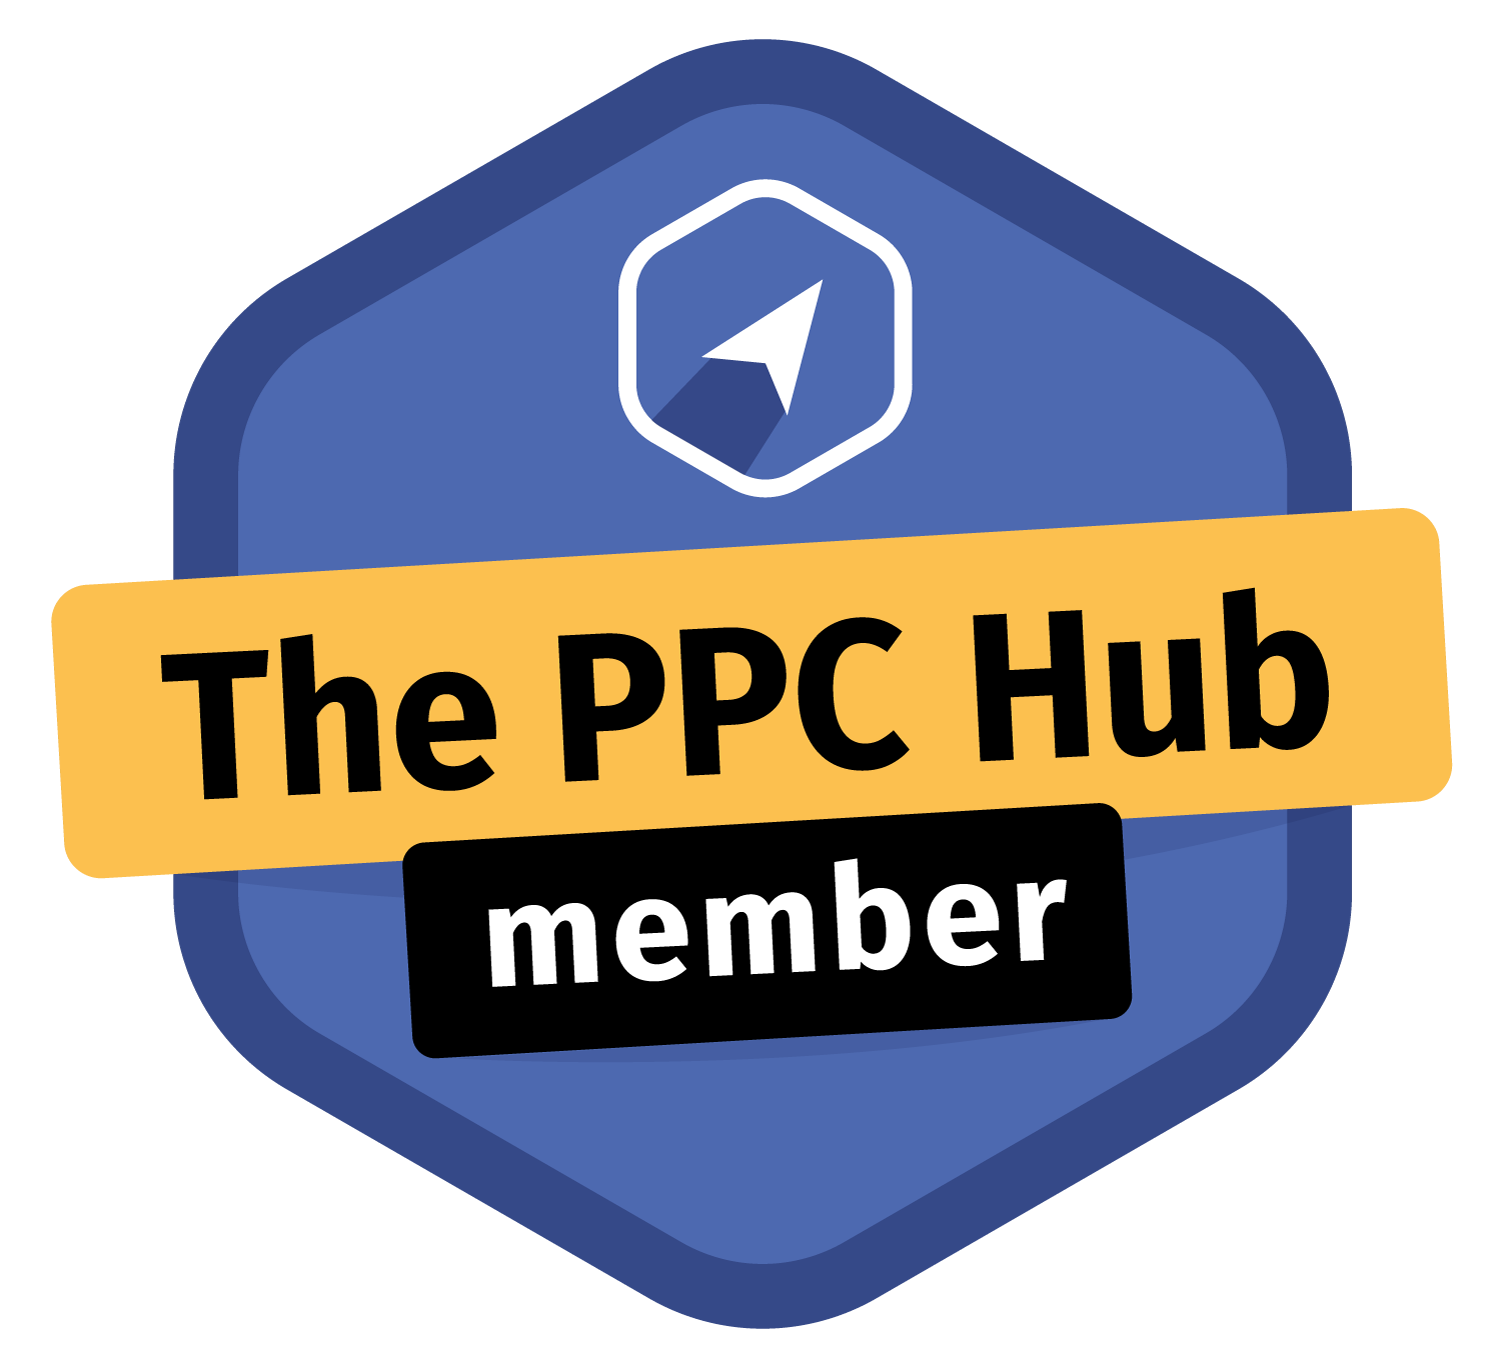 The PPC Hub member